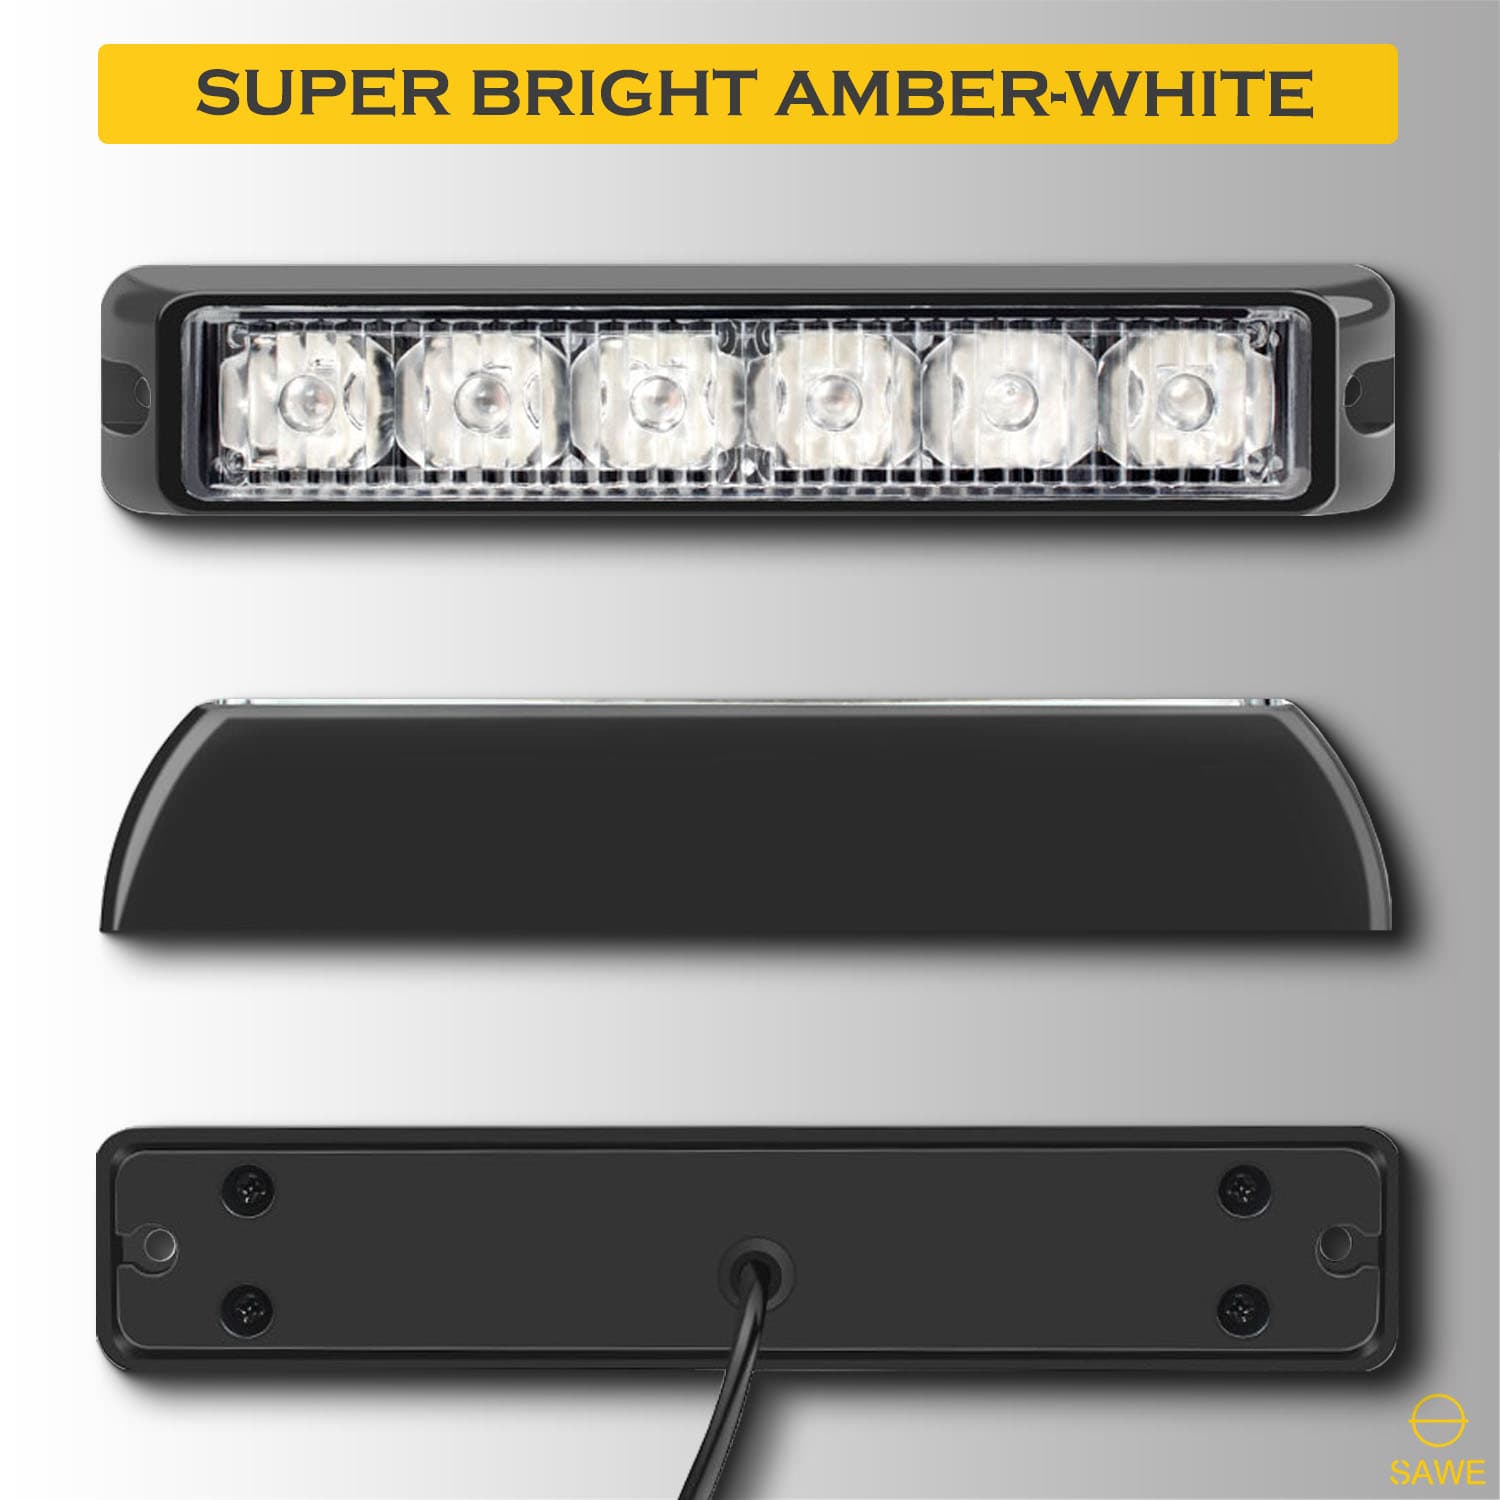 Premier Emergency LED Strobe Lights Bar for Offroad Car Truck Warning Hazard Flash Grille and Surface Mount Light - Amber White 6-LED